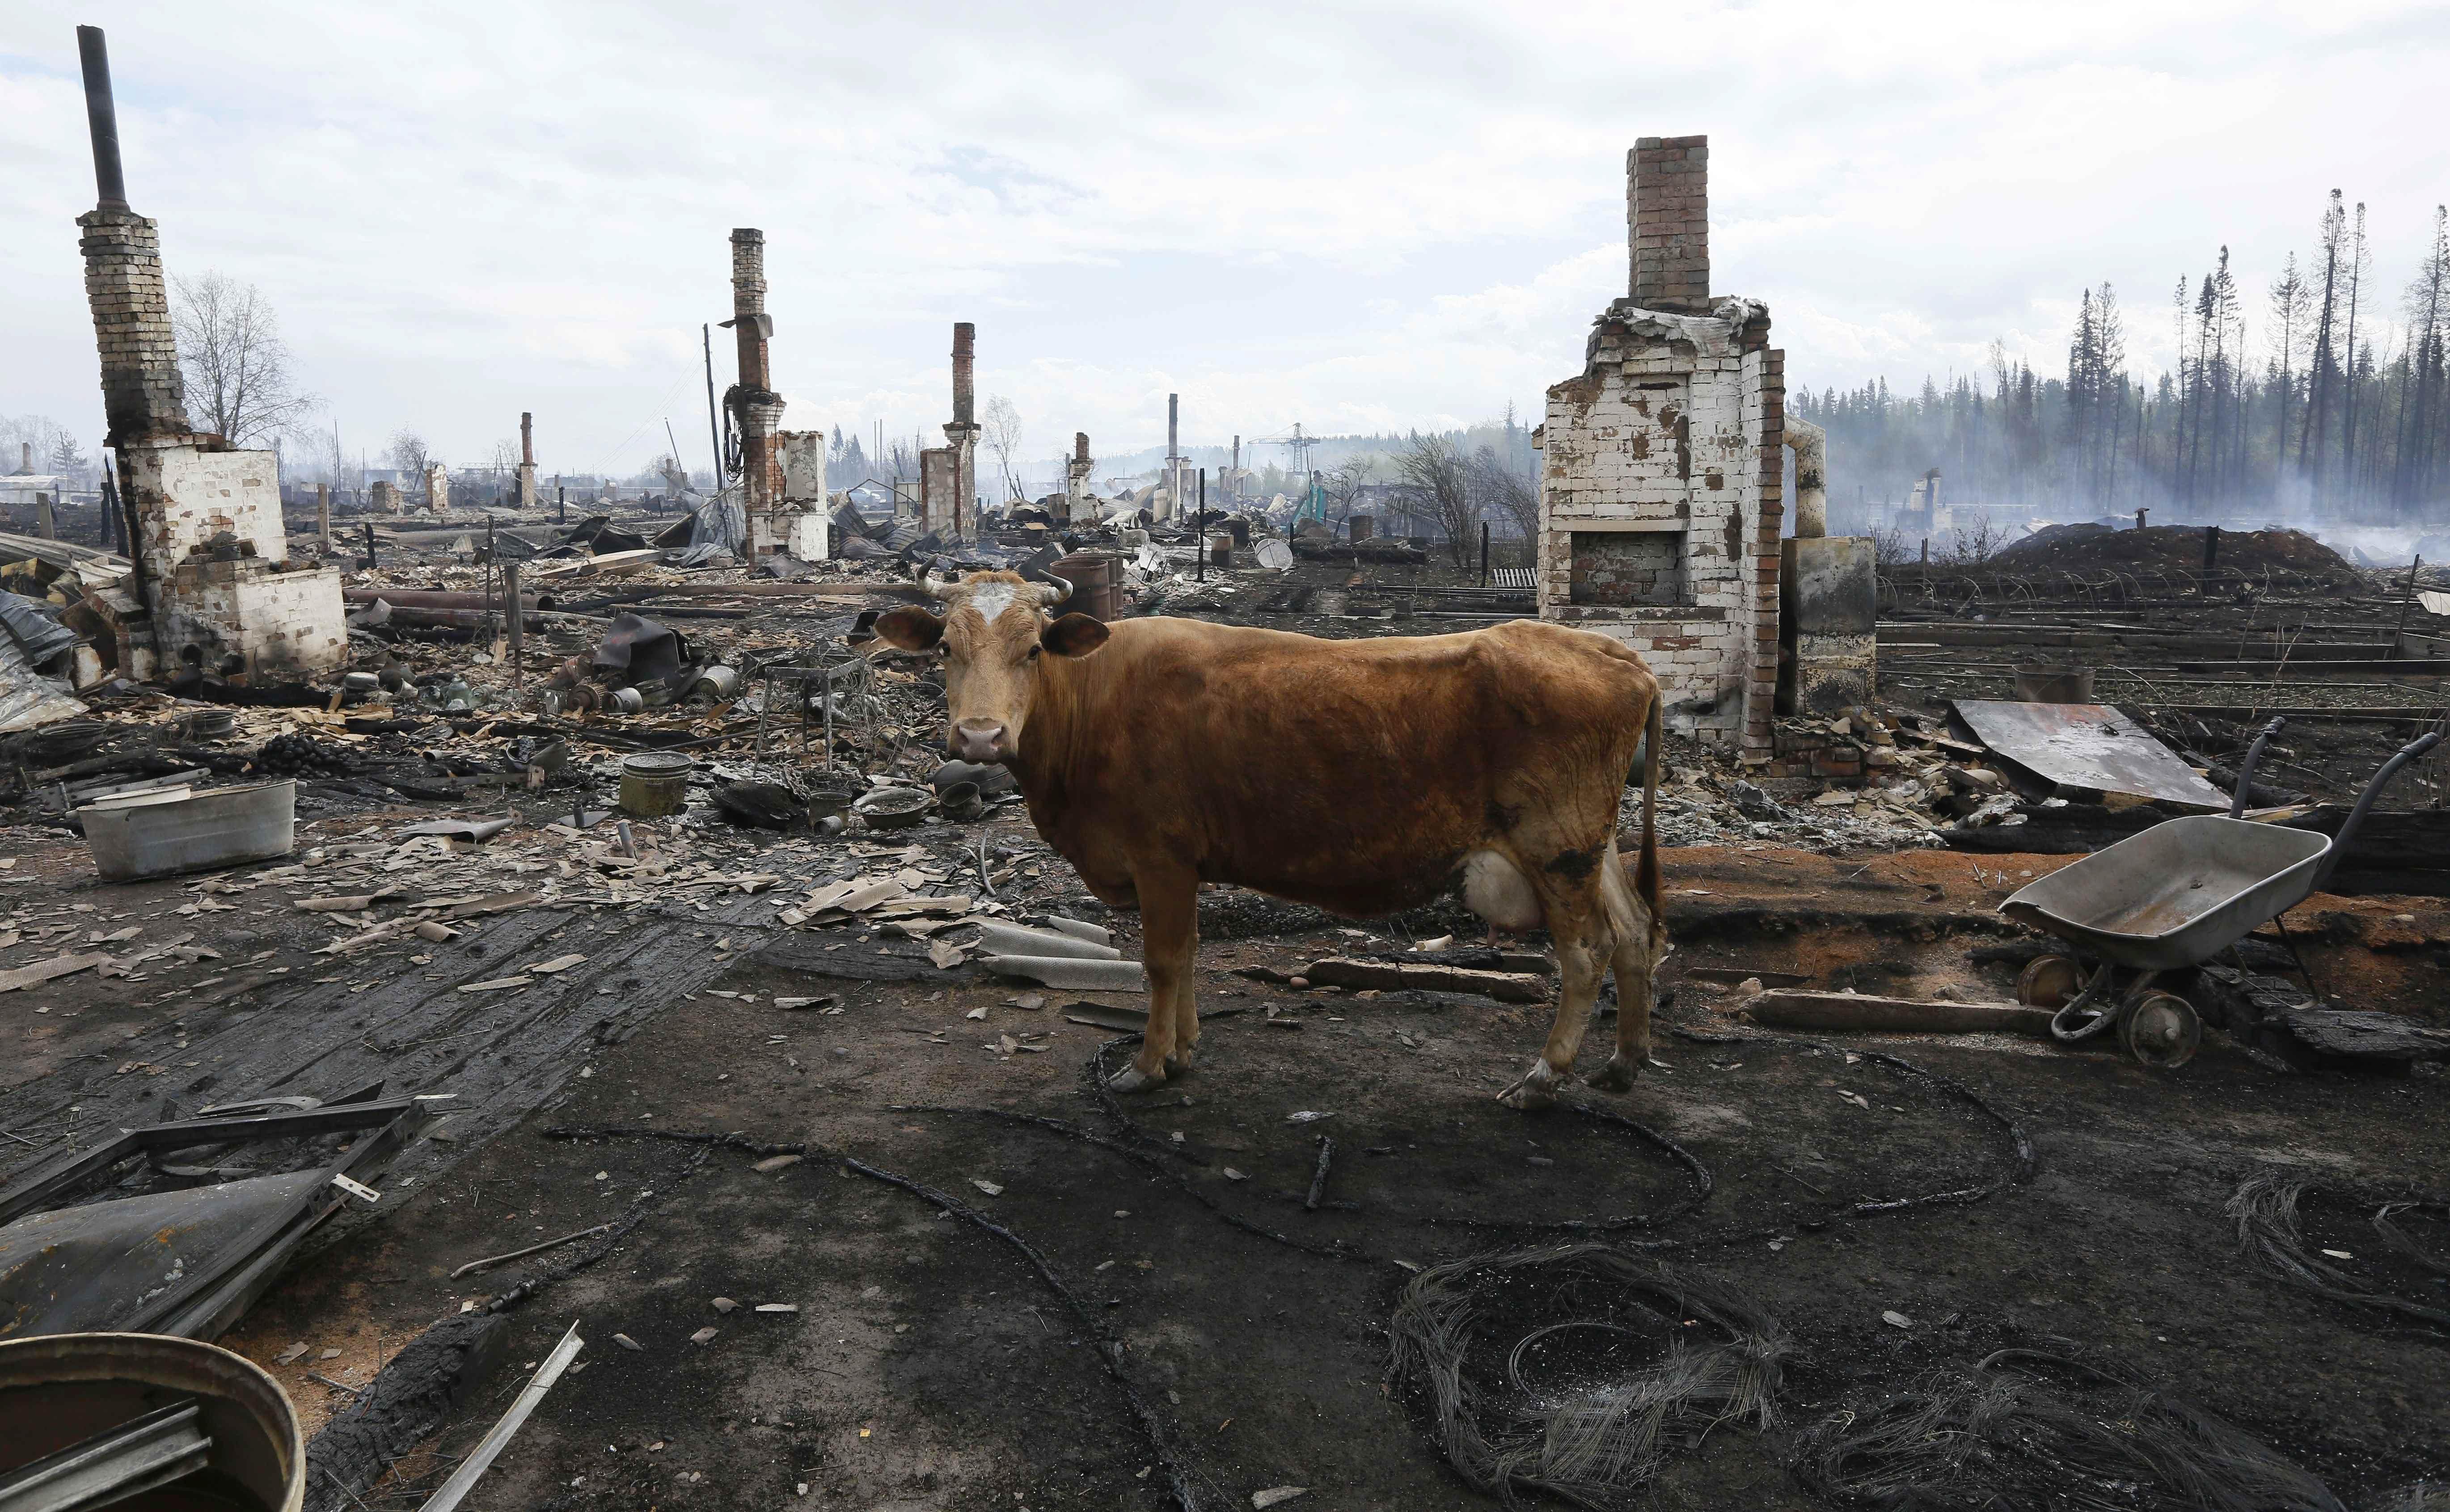 A cow stands amidst the debris of burnt houses after recent wildfires in Krasnoyarsk region